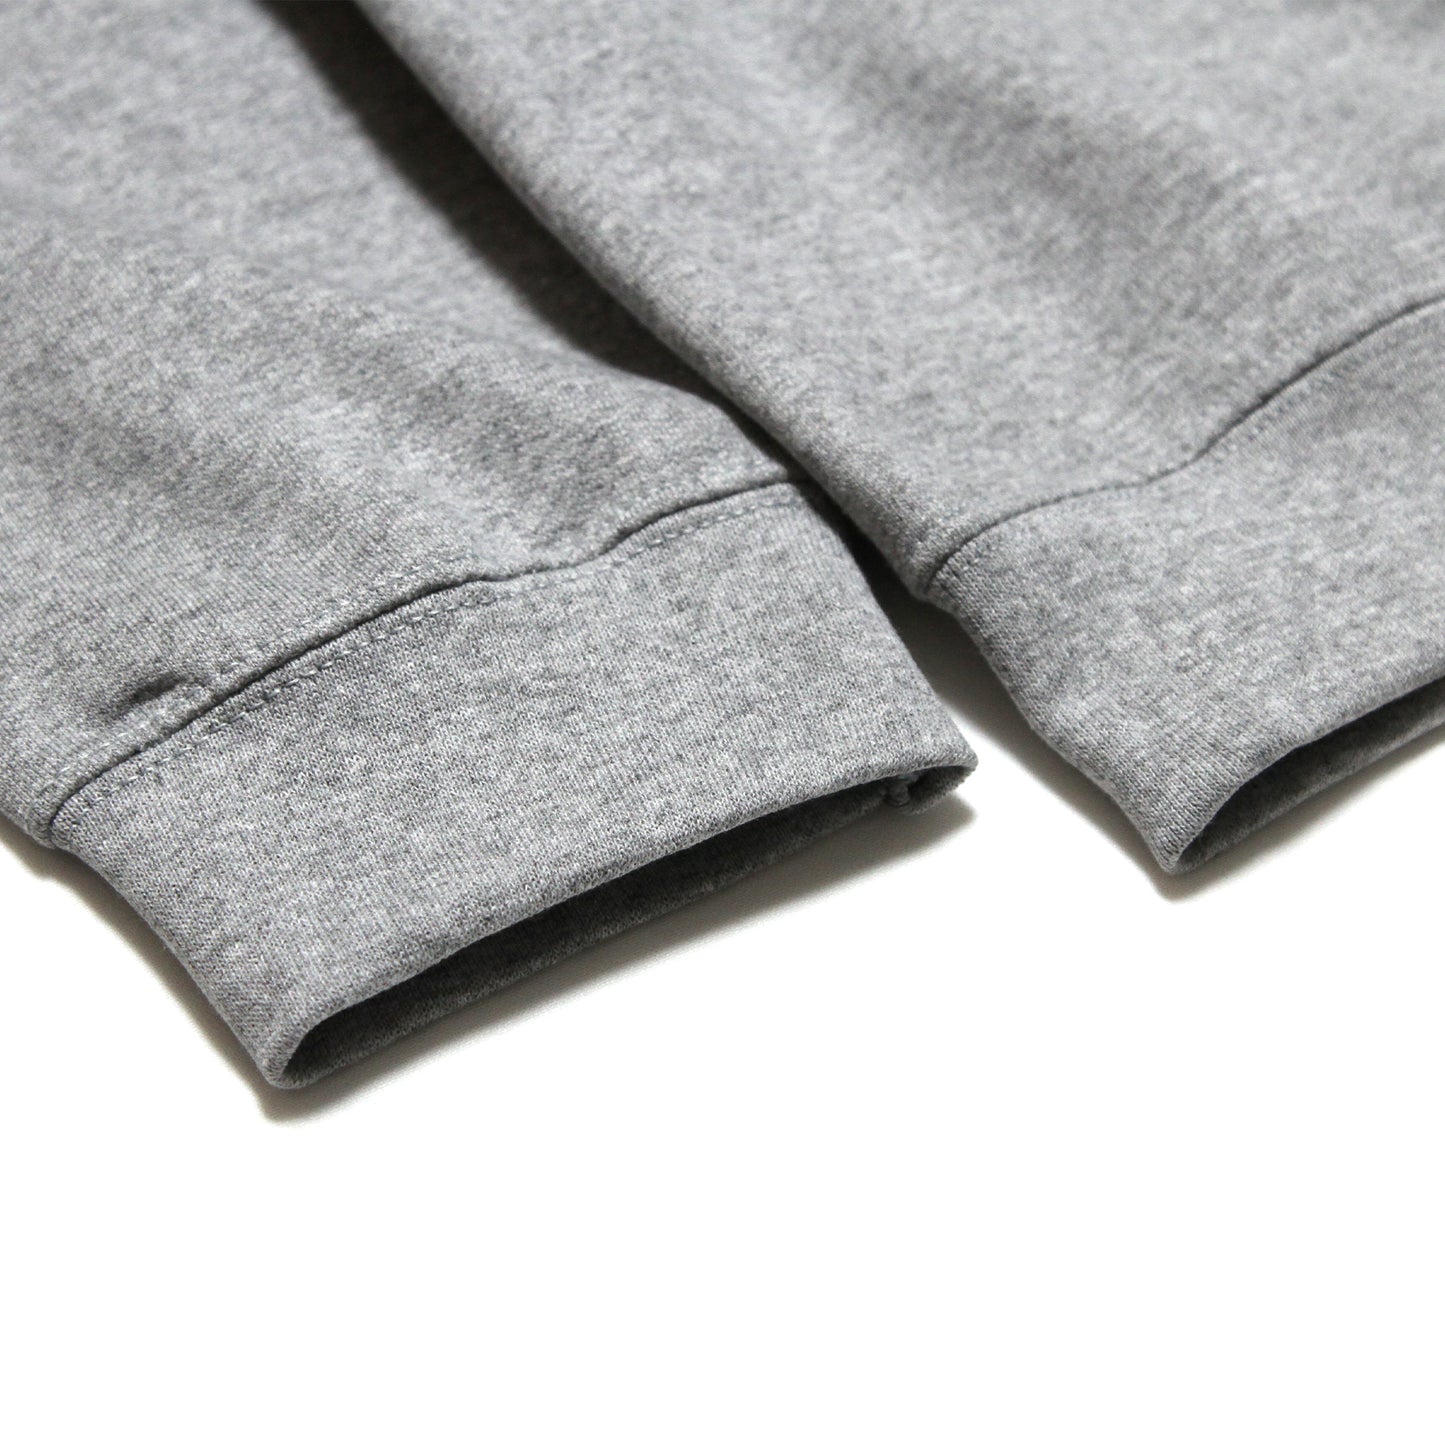 ALIVE INDUSTRY - 22 Logo Sweatshirt/Grey